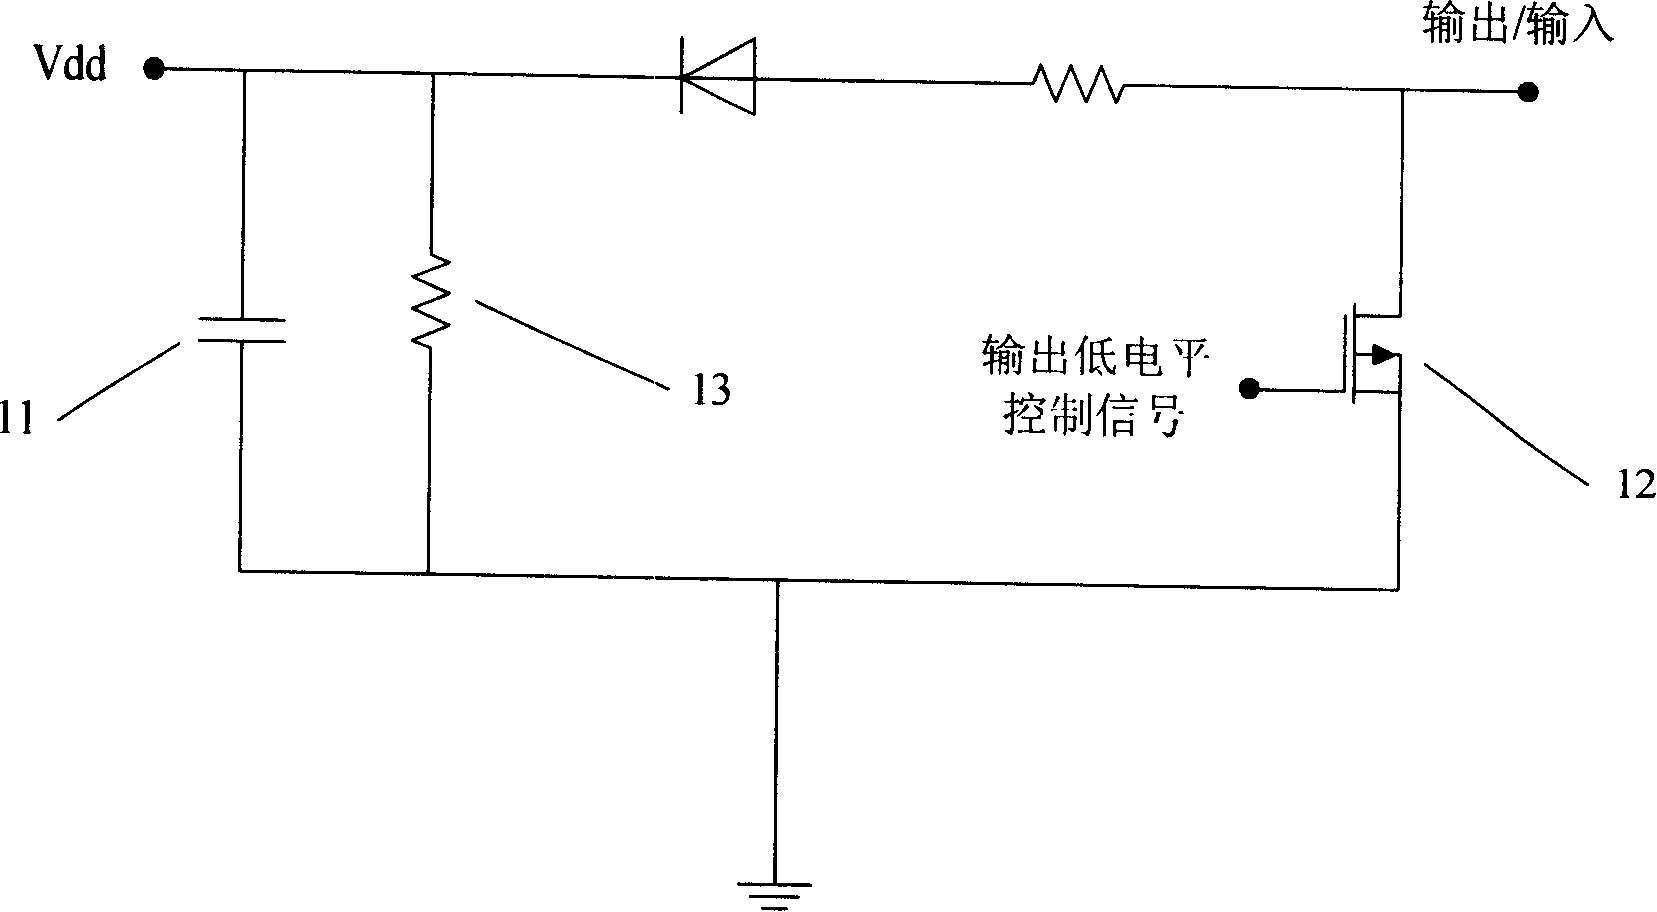 IC chip inner capacitor discharging control circuit